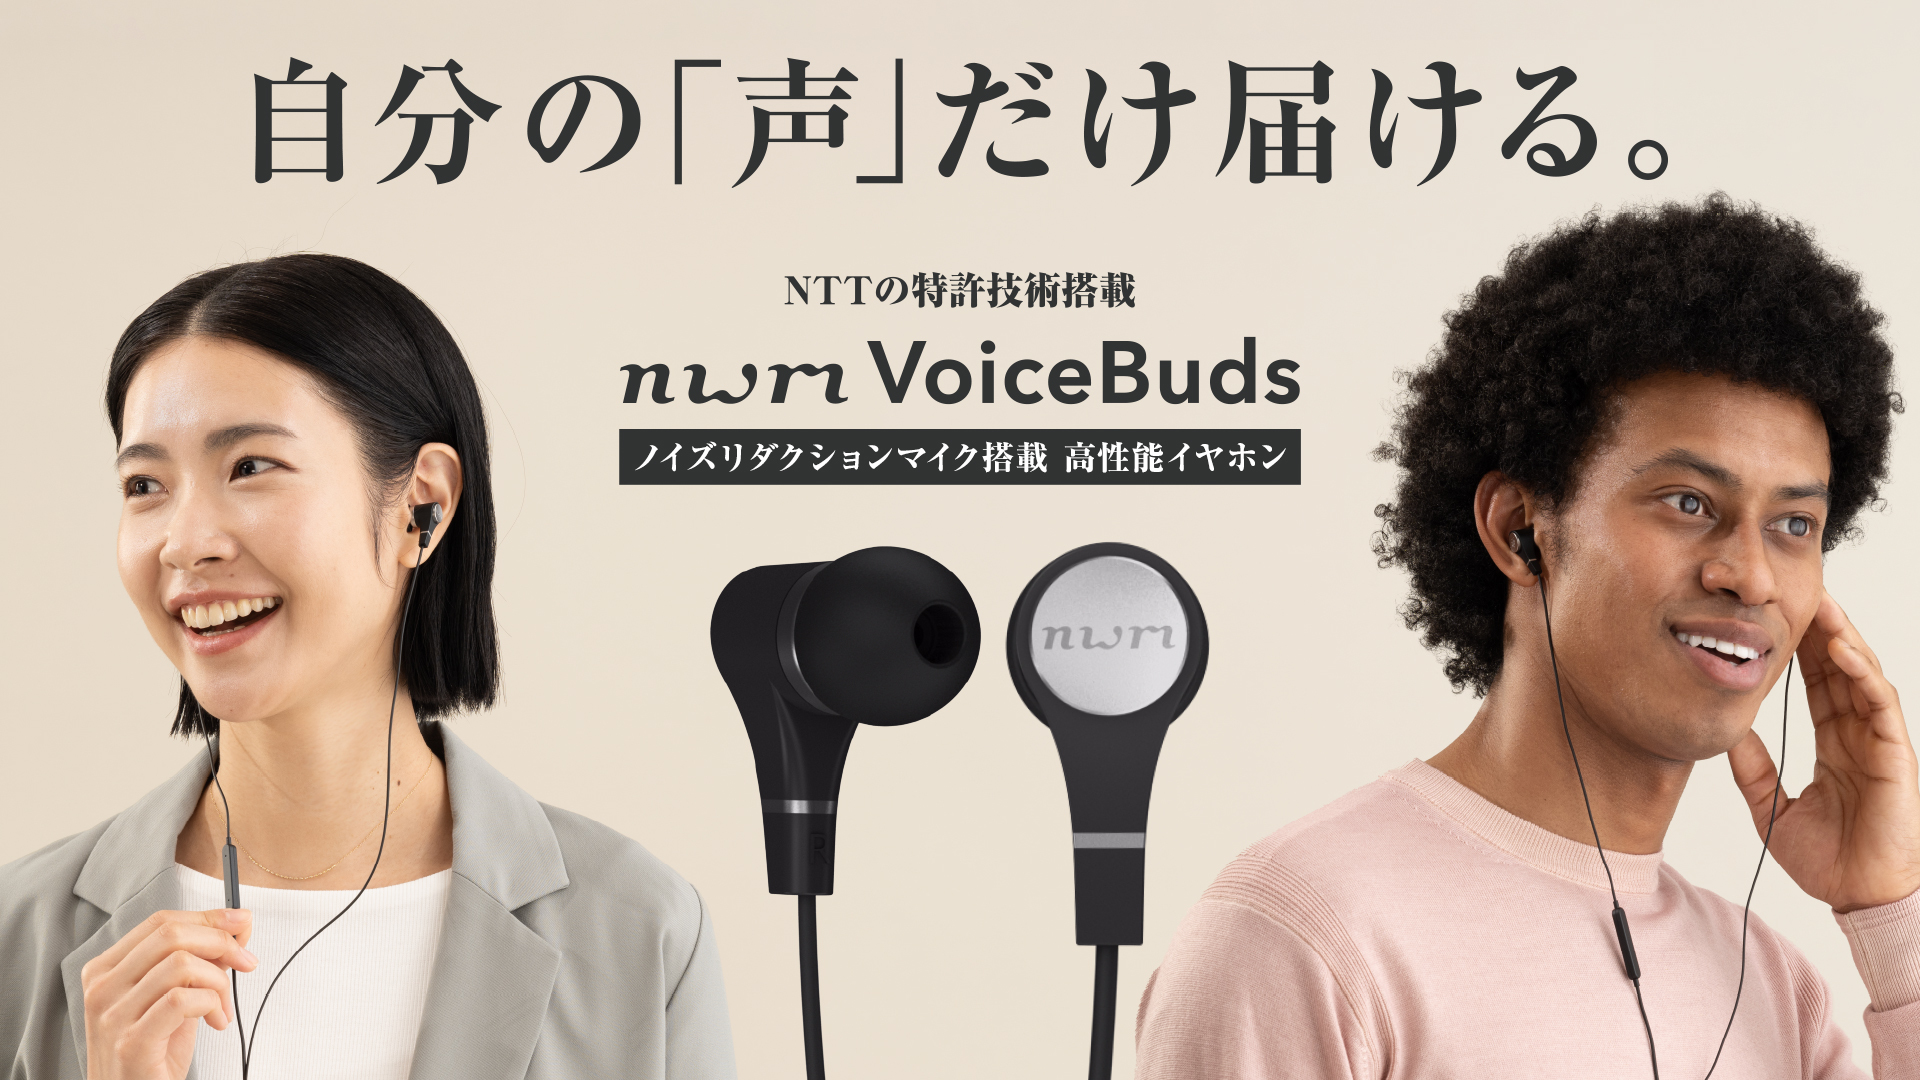 NTTソノリティ「nwm Voice Buds」